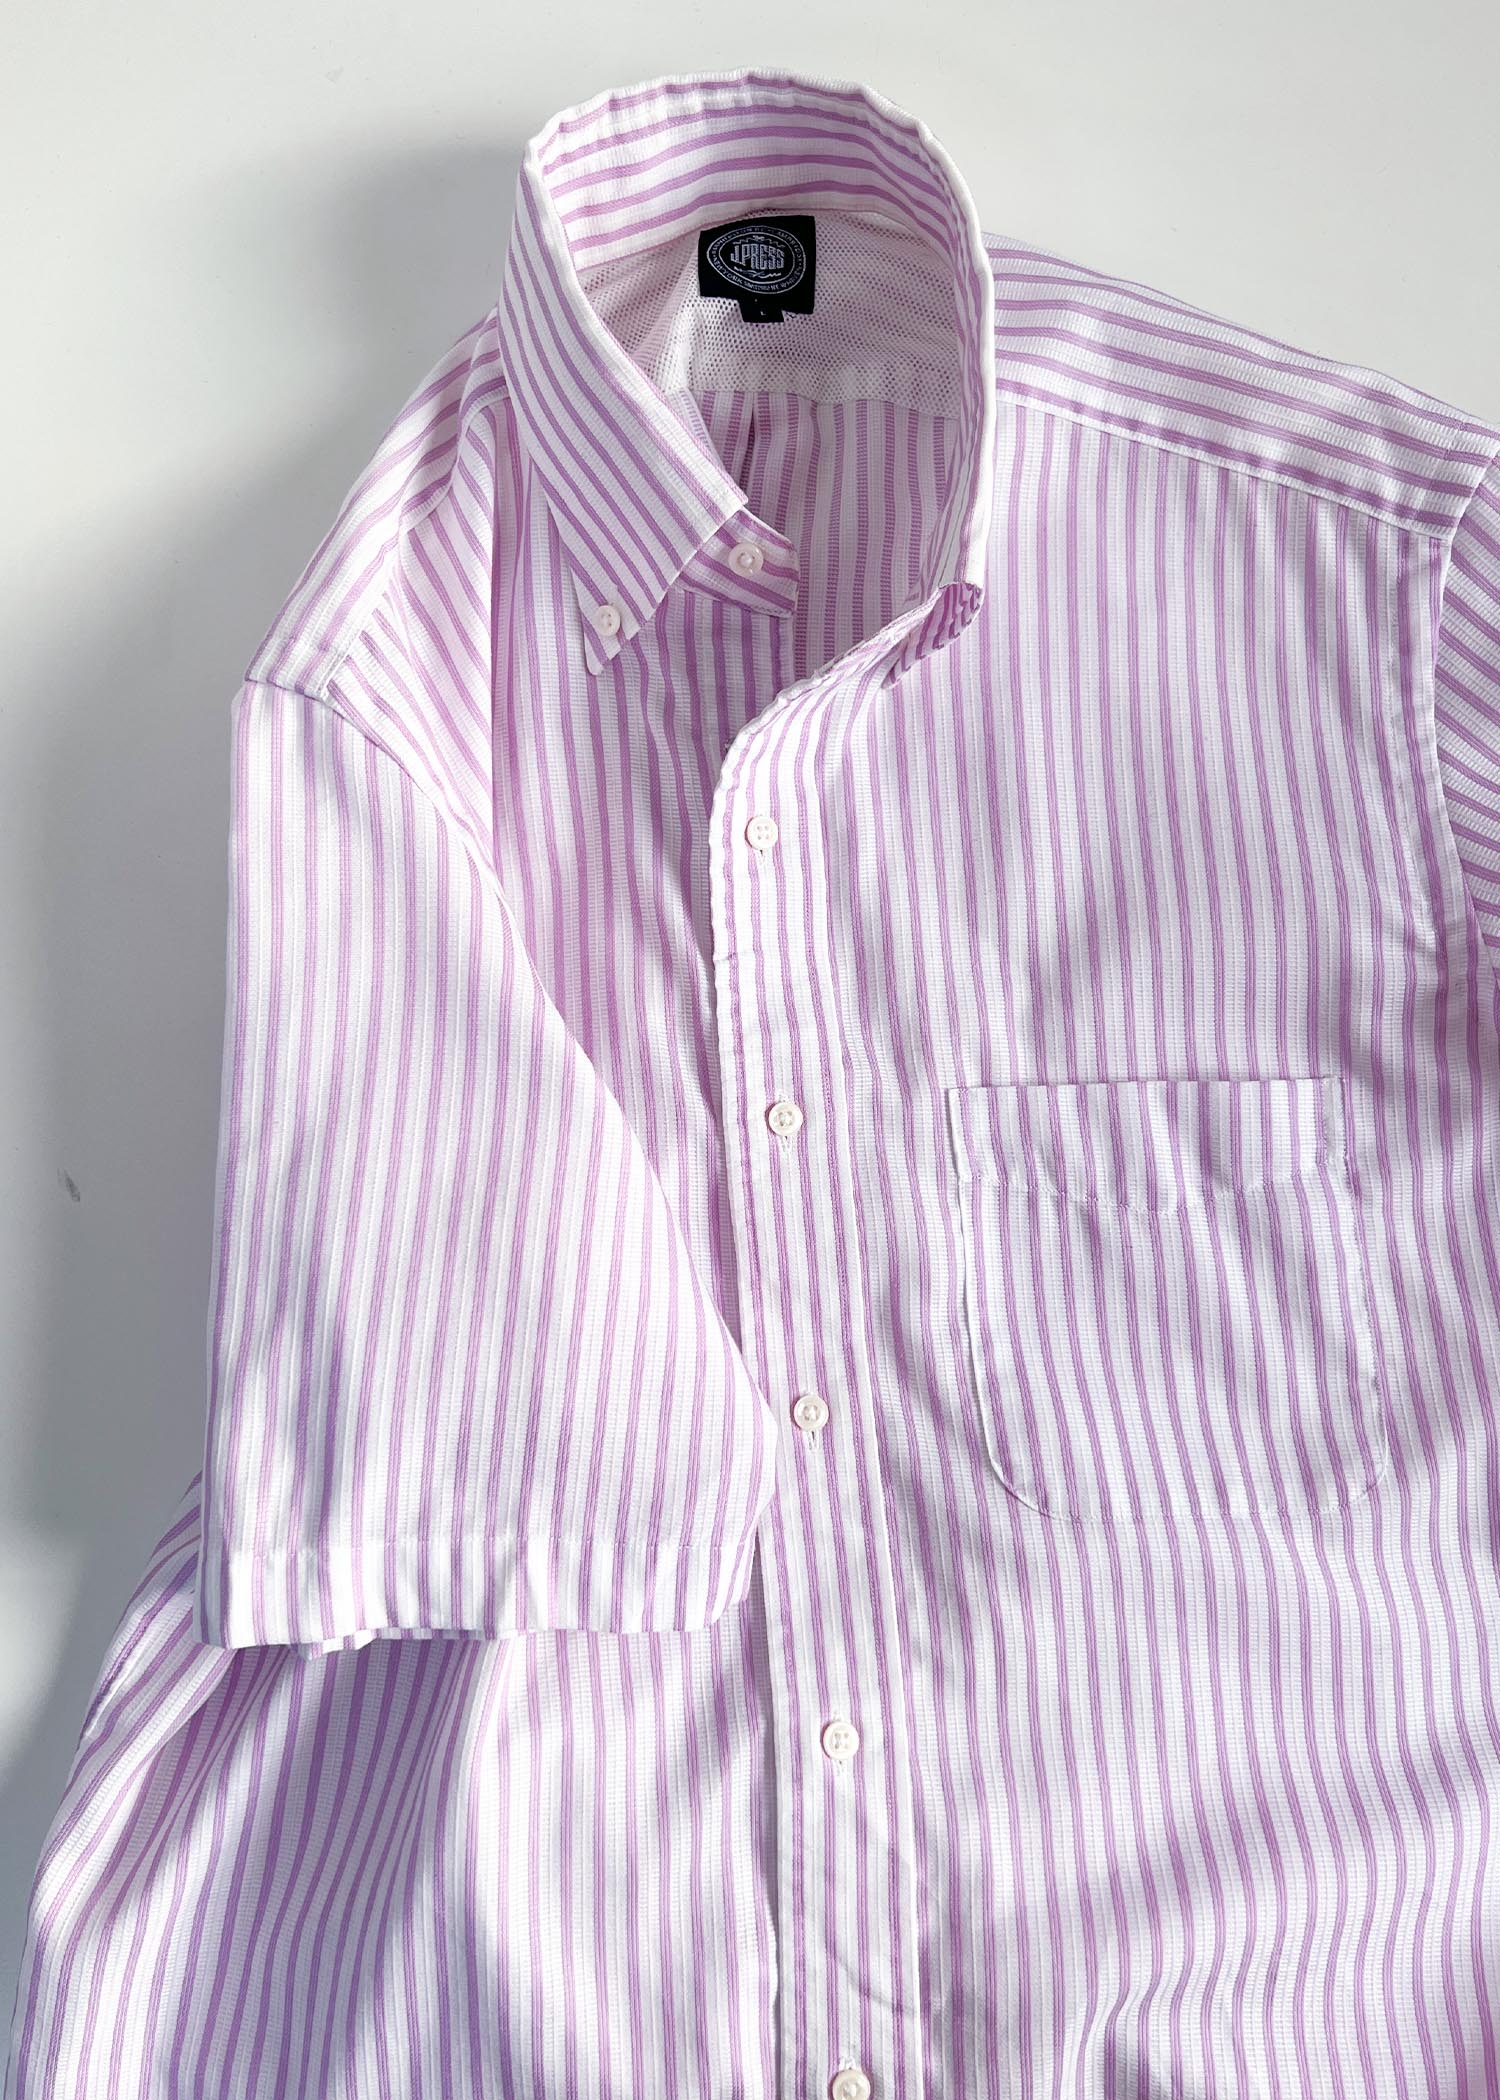 JPRESS pink stripe half shirts